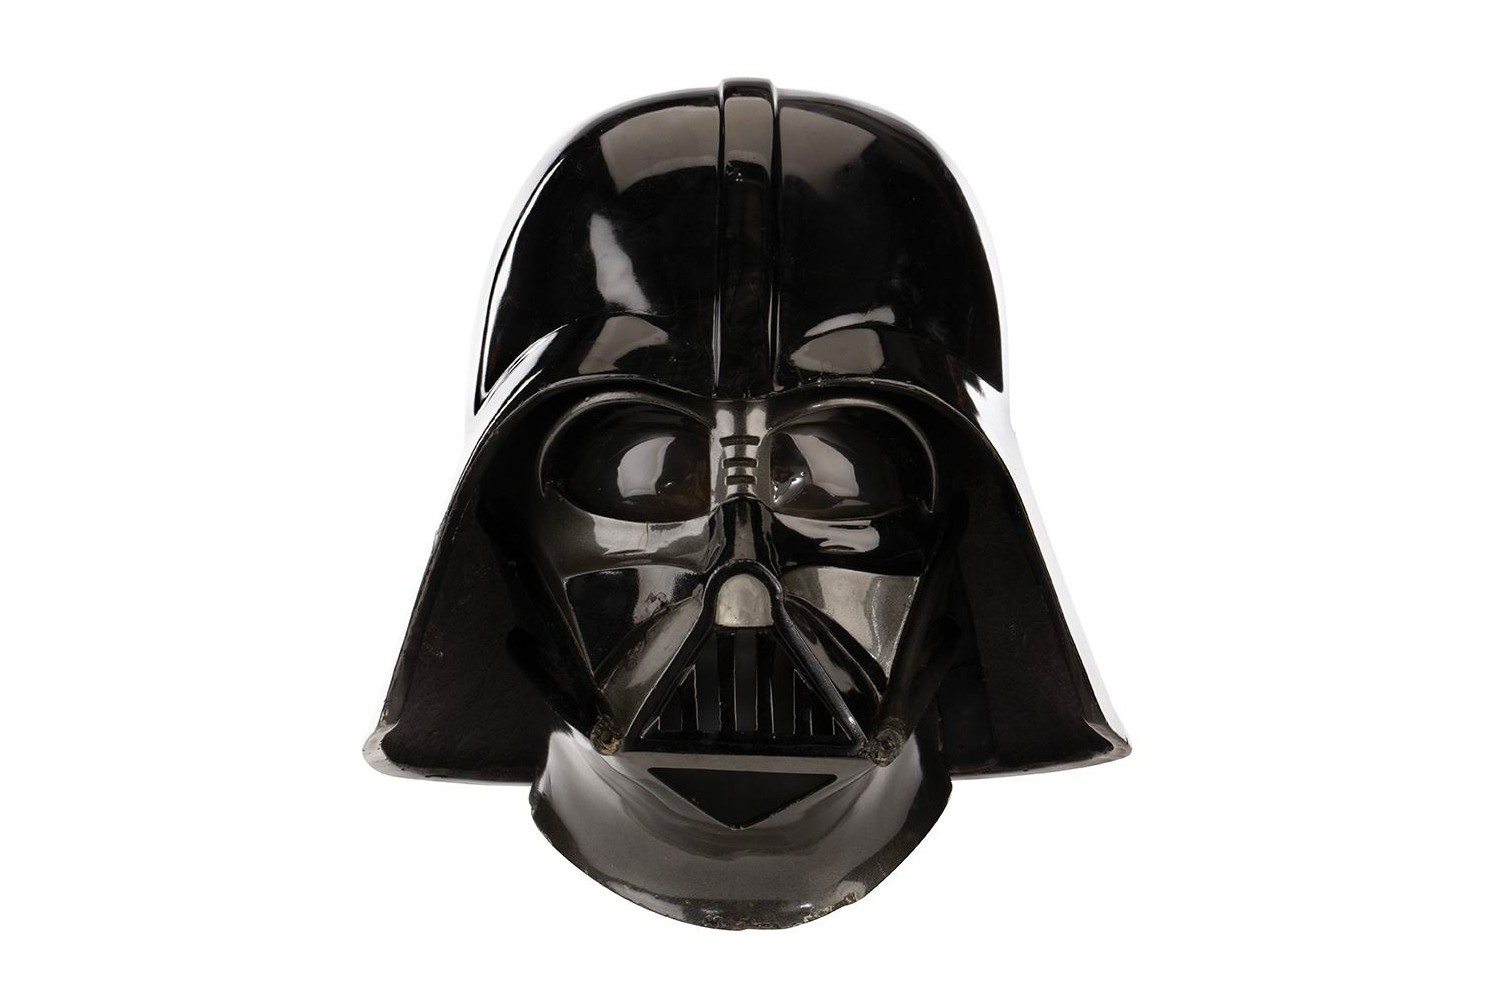 《Star Wars》电影元祖 Darth Vader 面罩头盔正展开拍卖